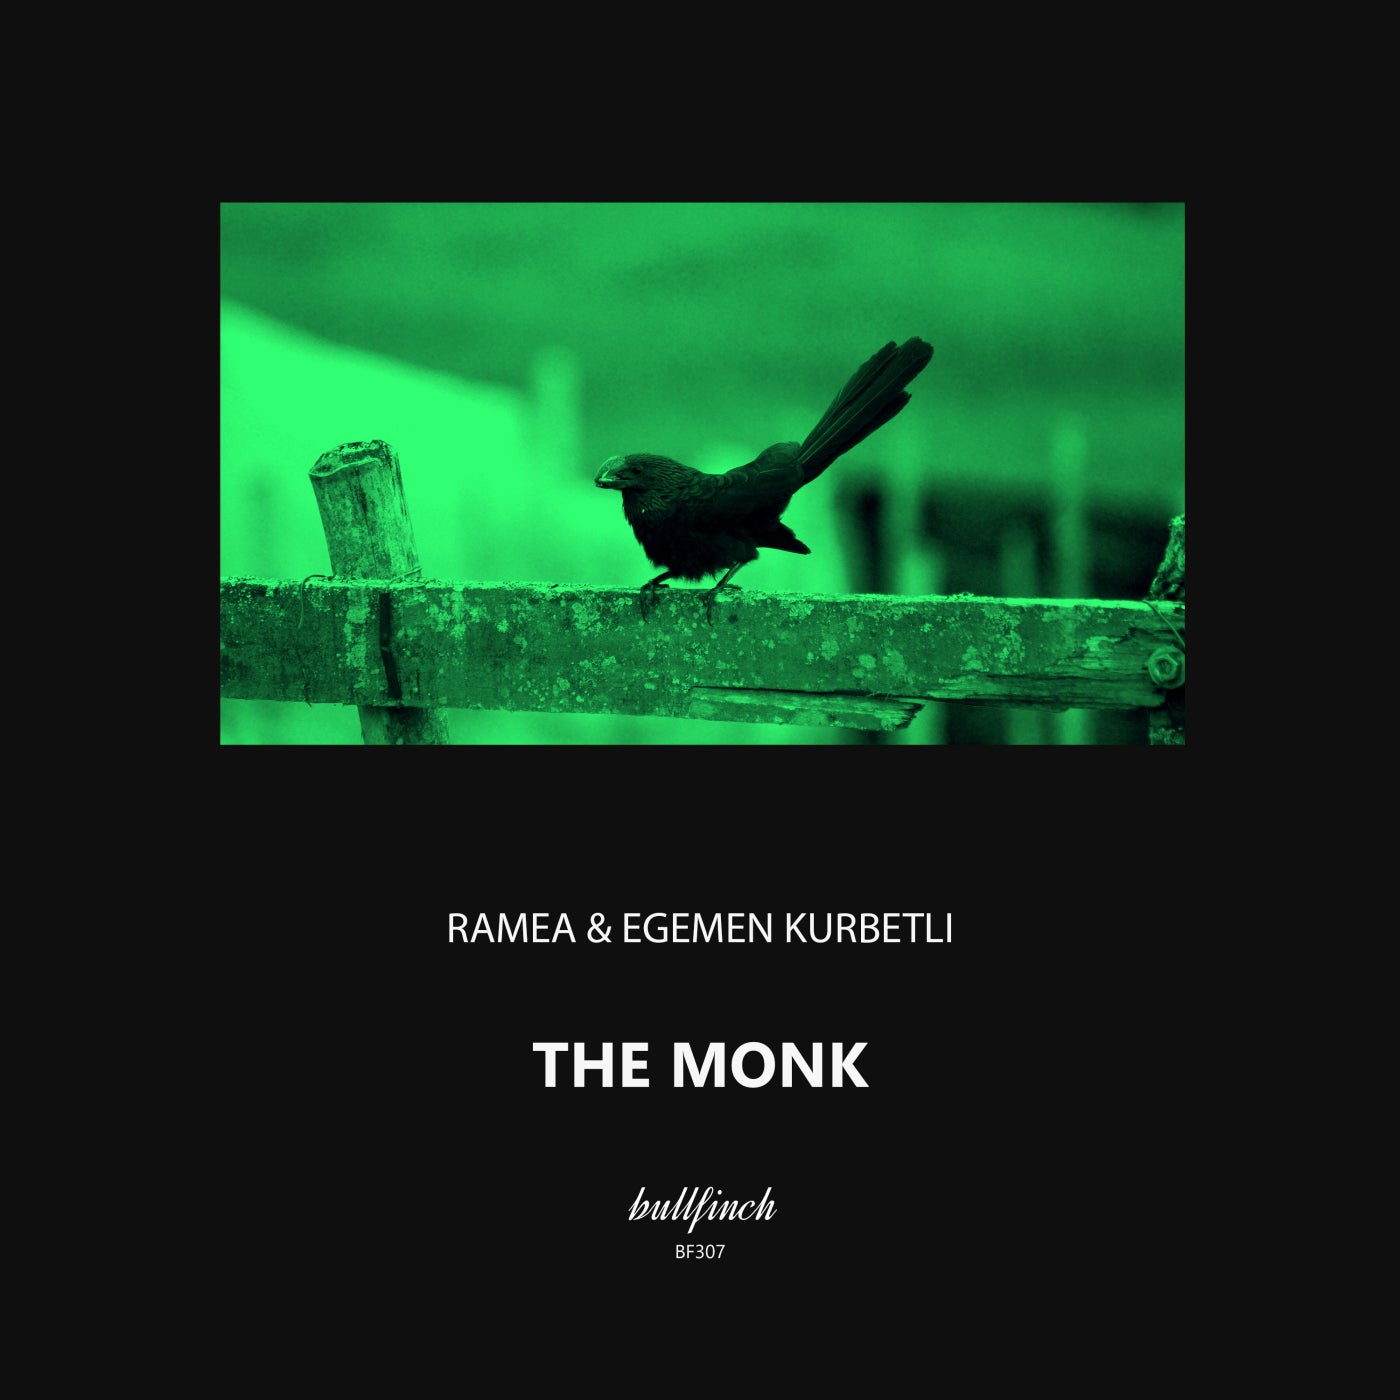 Ramea, Egemen Kurbetli – The Monk [BF307]